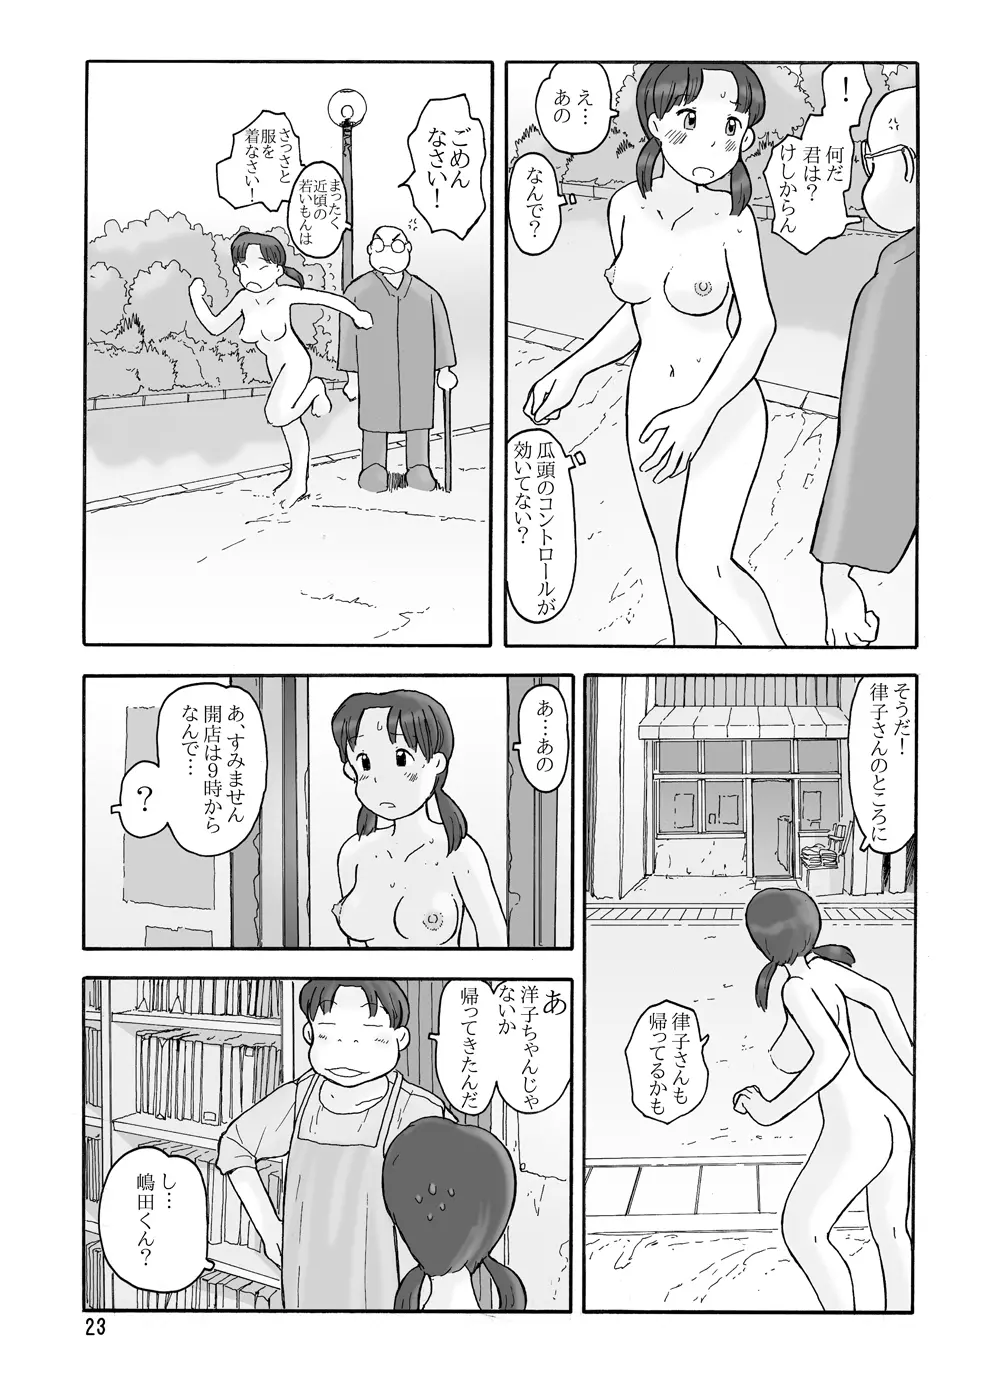 瓜頭 - page22